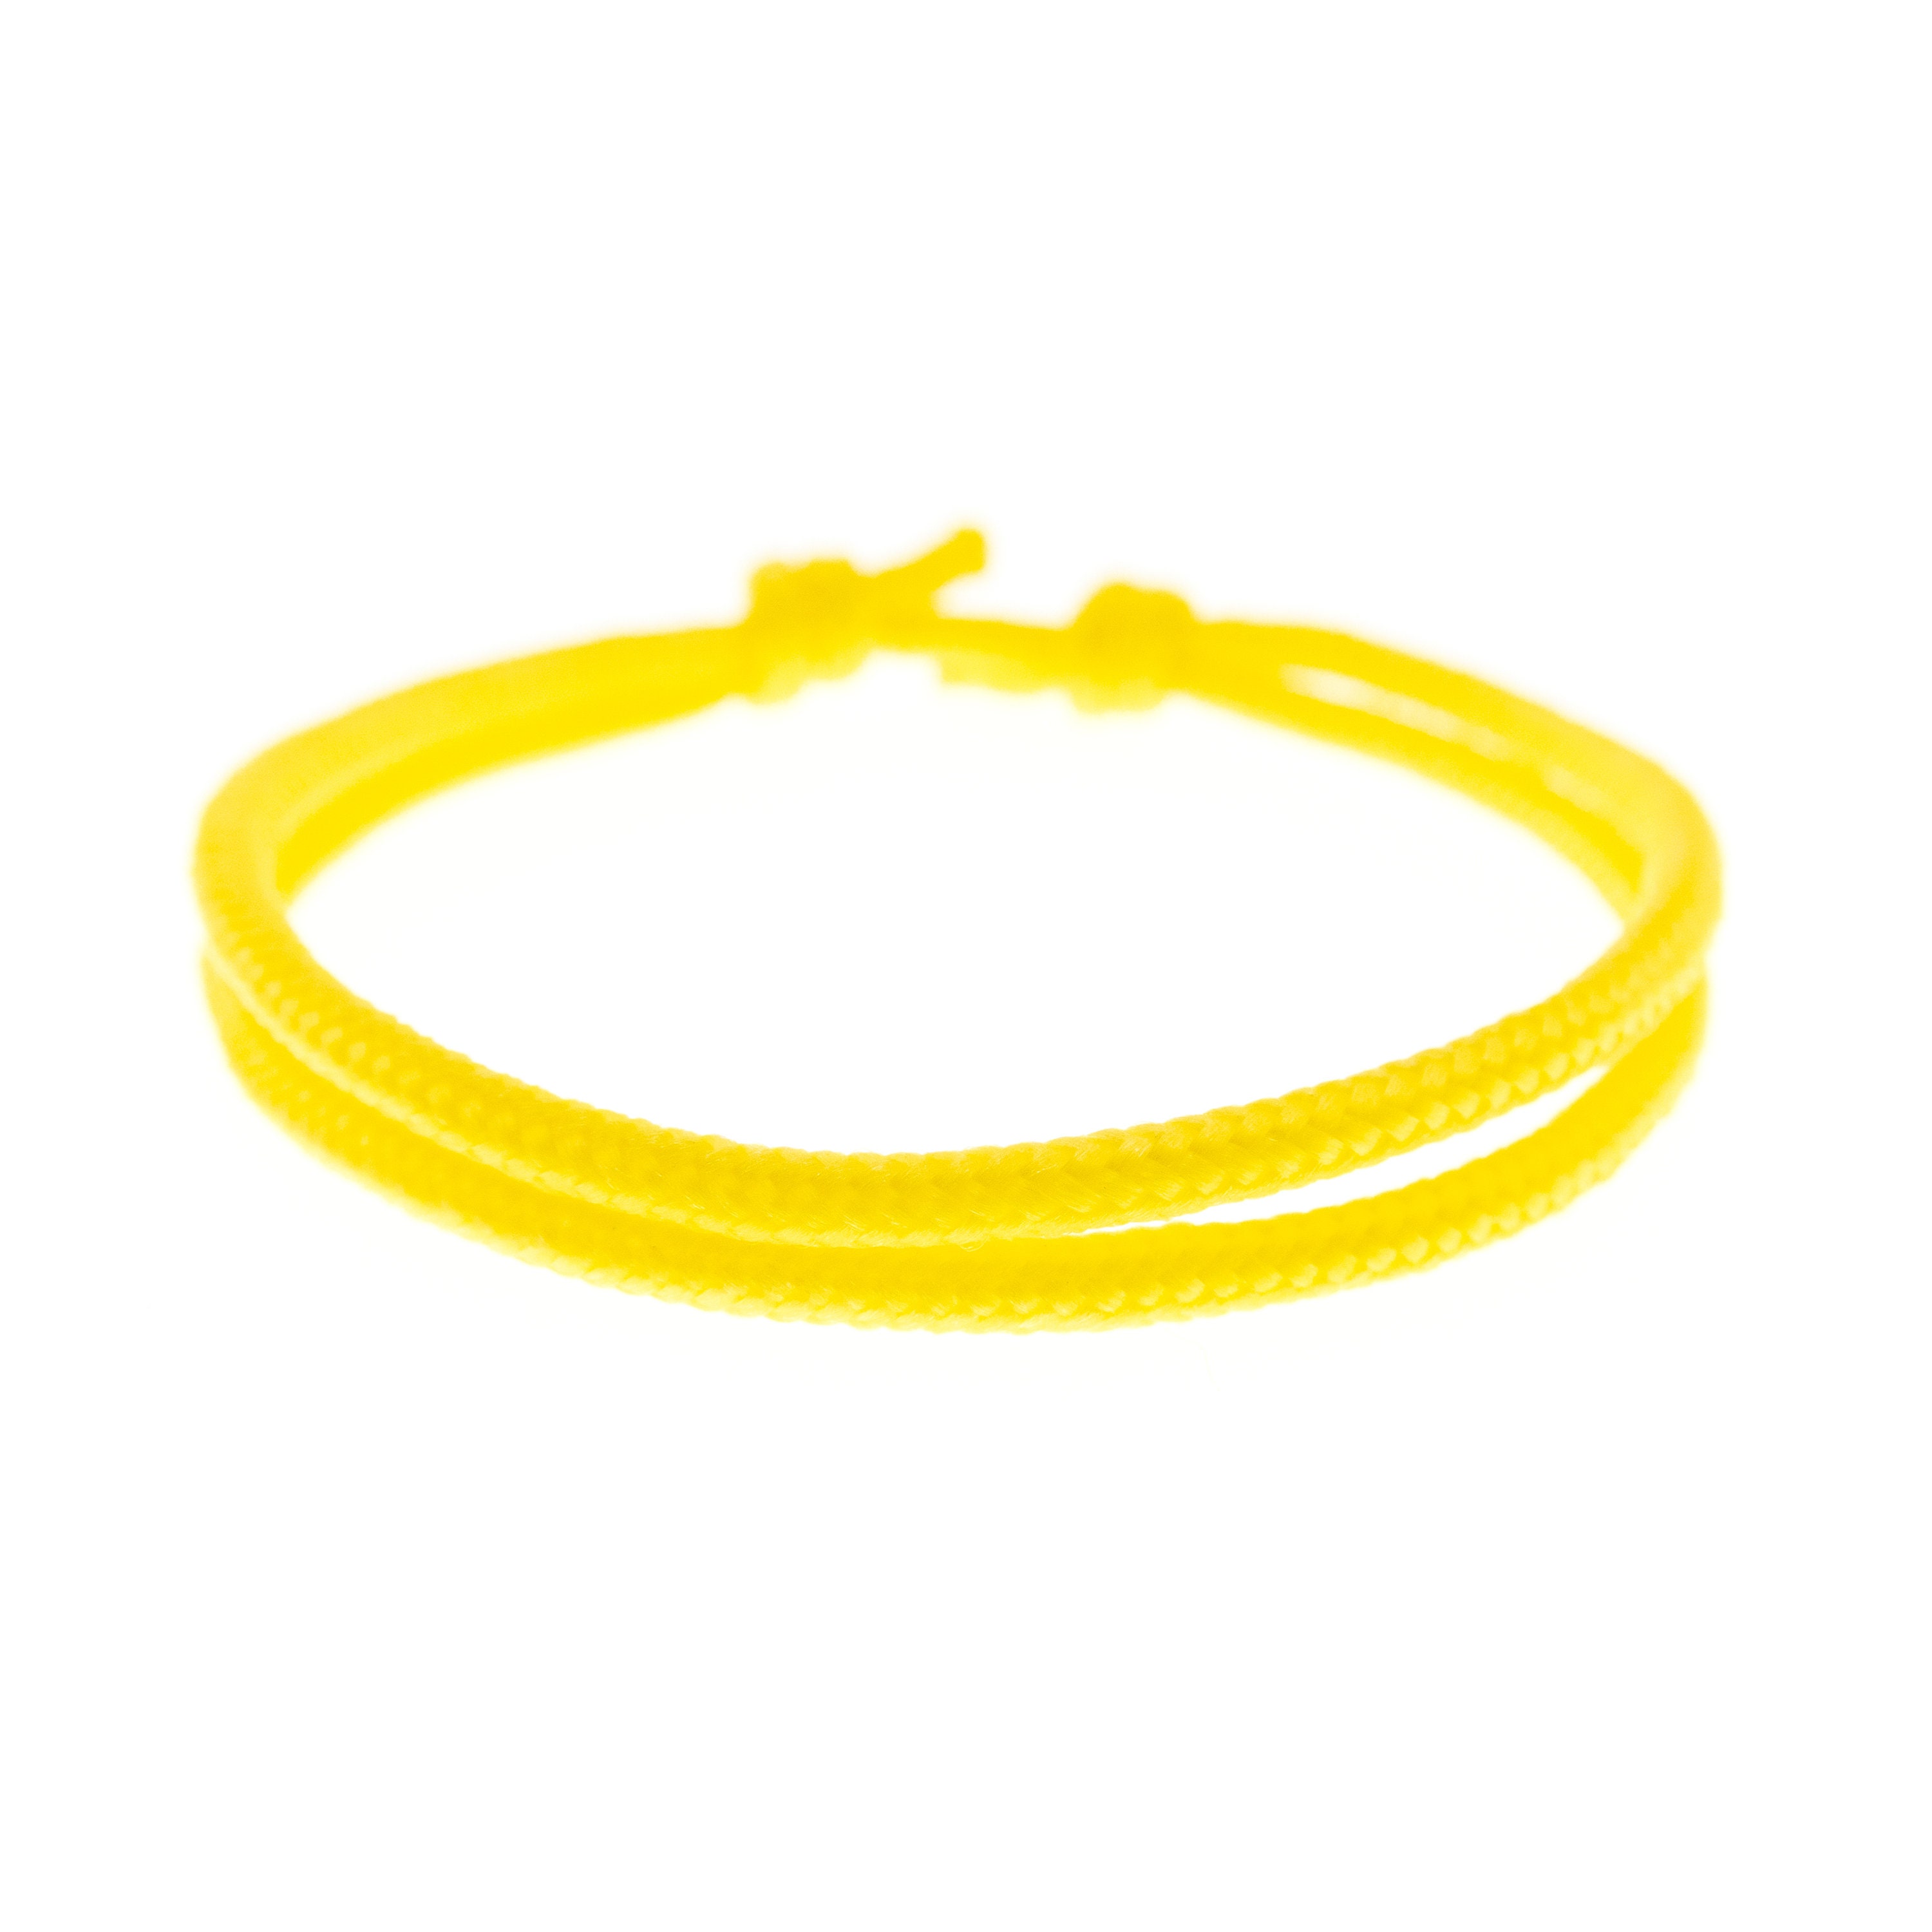 Sea Rope Bracelet. Nautical Bracelet Mens or Womens. Adjustable Cord Ocean  Cuff for Men, Ladies. Yellow Survival Bracelet. Wrap Paracord 2mm